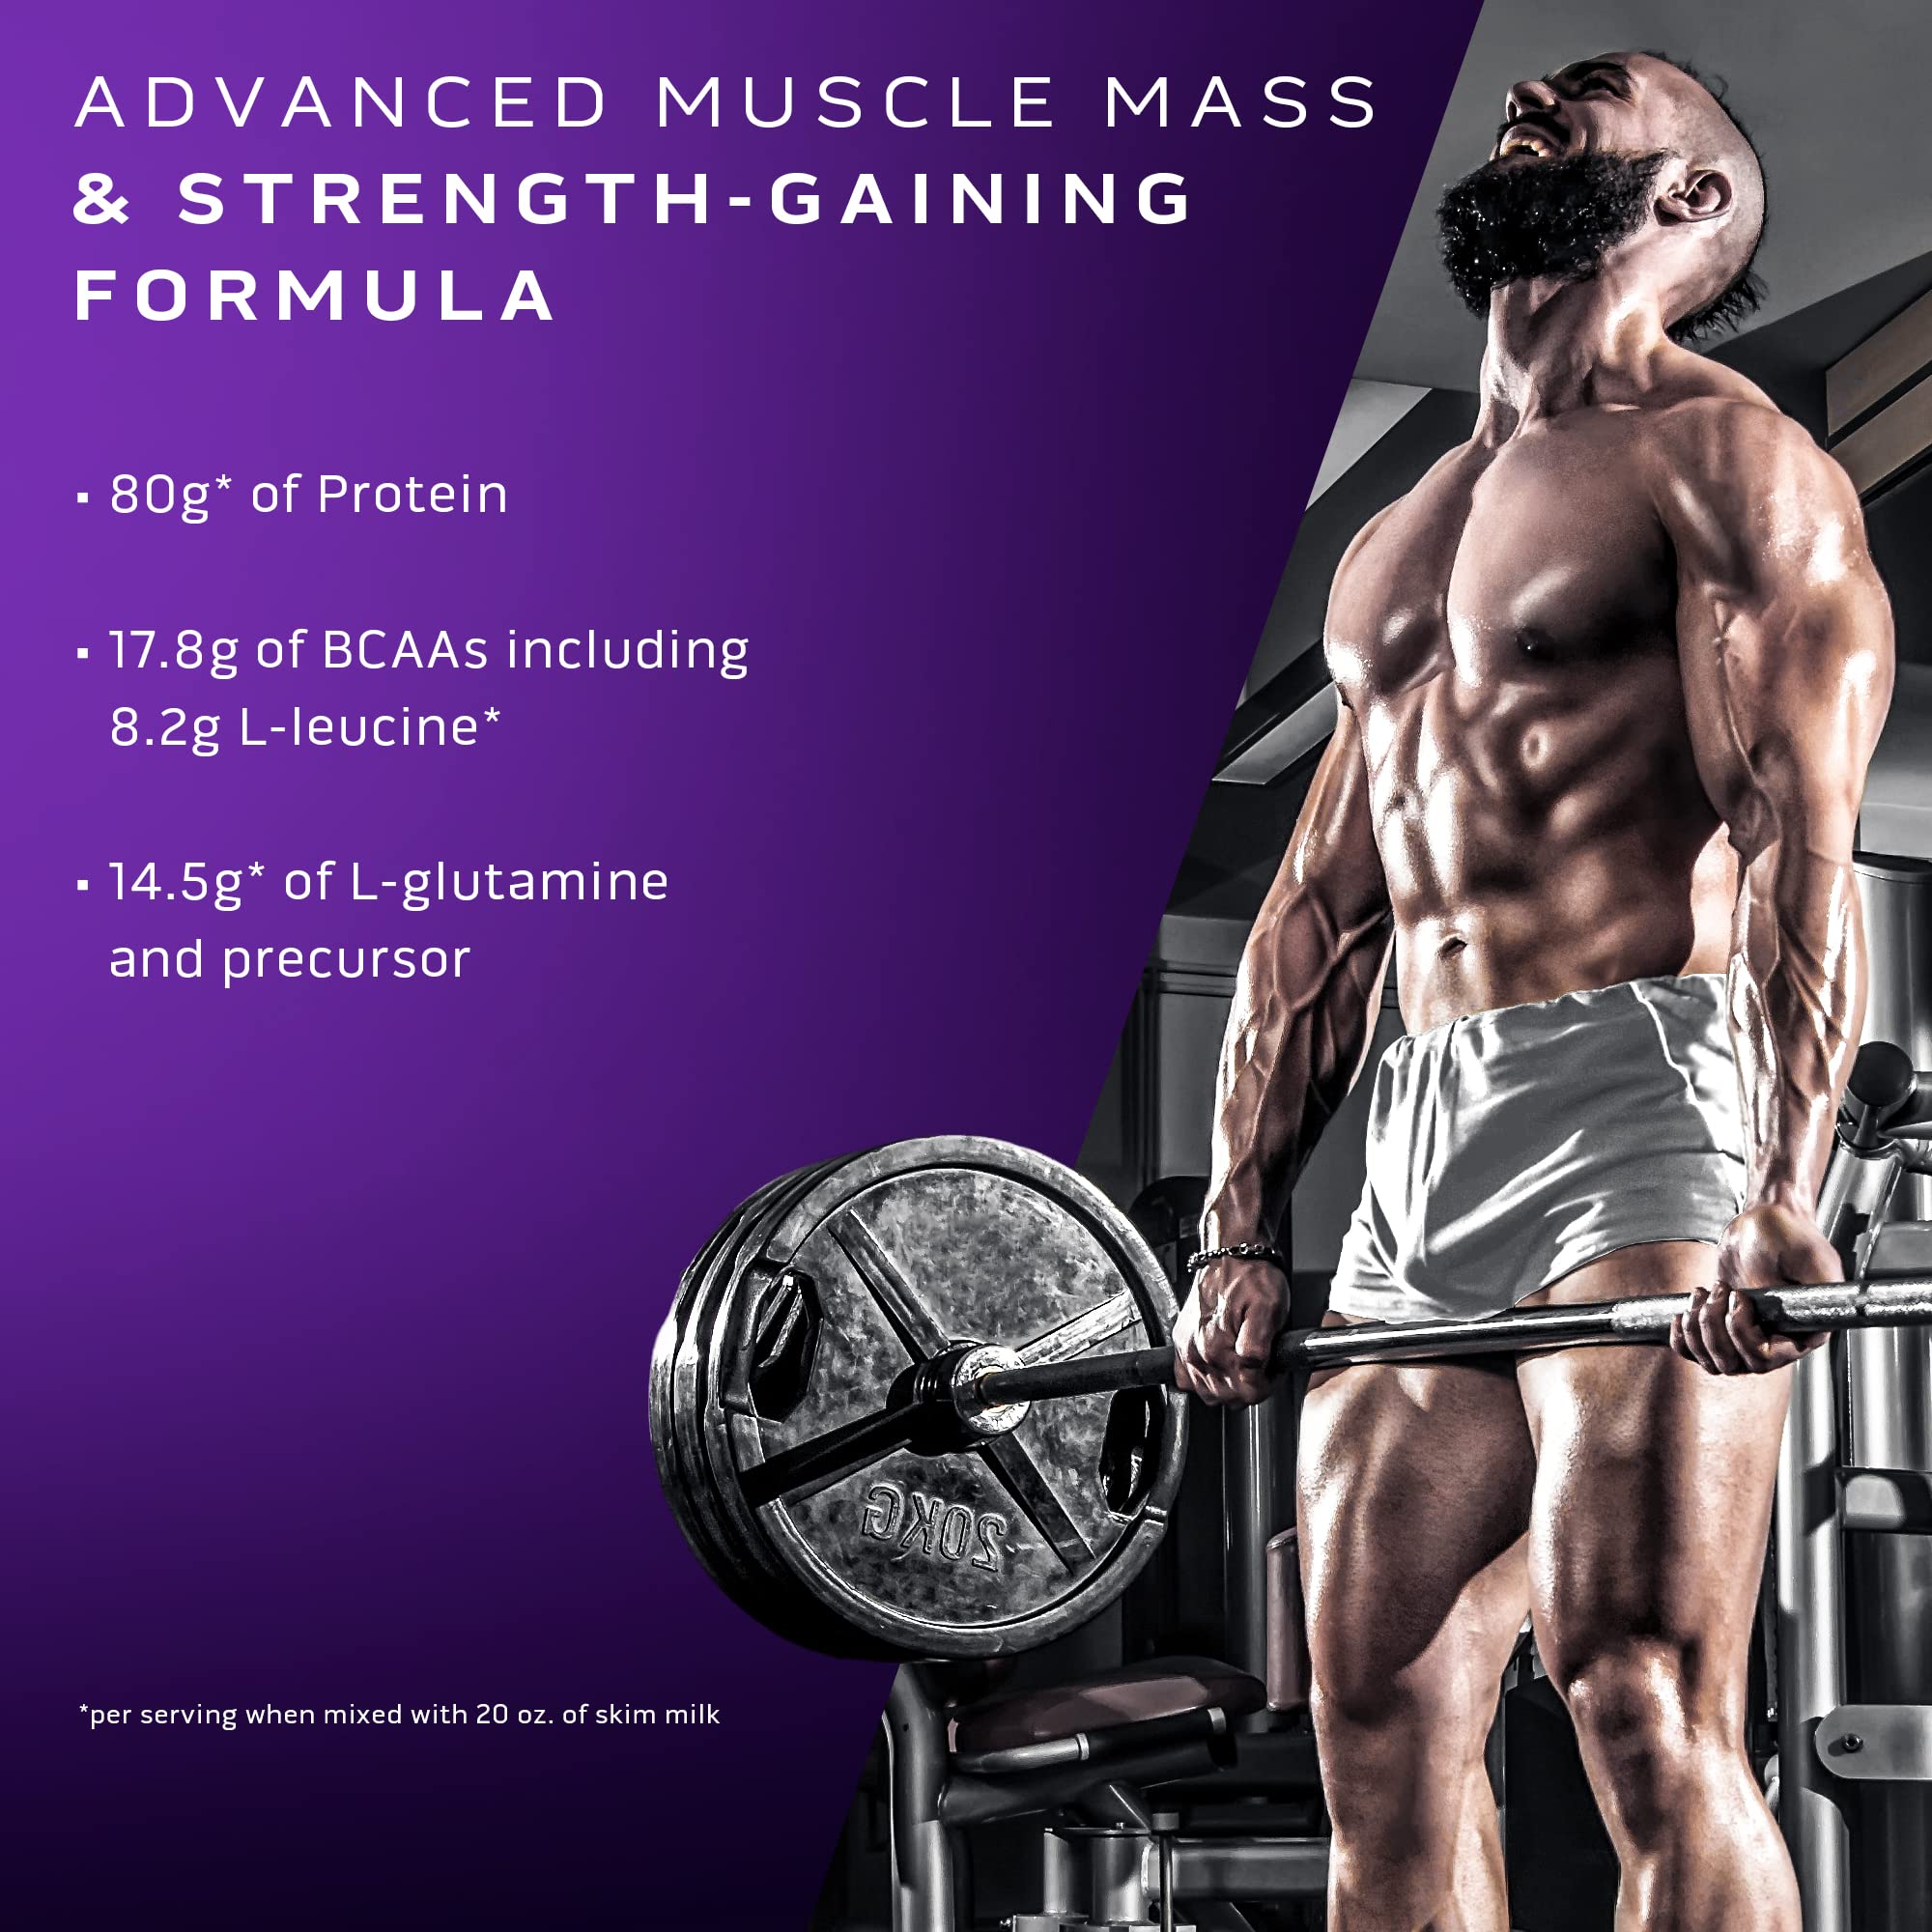 MuscleTech Mass Gainer Protein Powder, Mass-Tech Extreme 2000, Muscle Builder Whey Protein Powder, Protein + Creatine + Carbs, Max-Protein Weight Gainer for Women & Men, Vanilla, 20 lbs